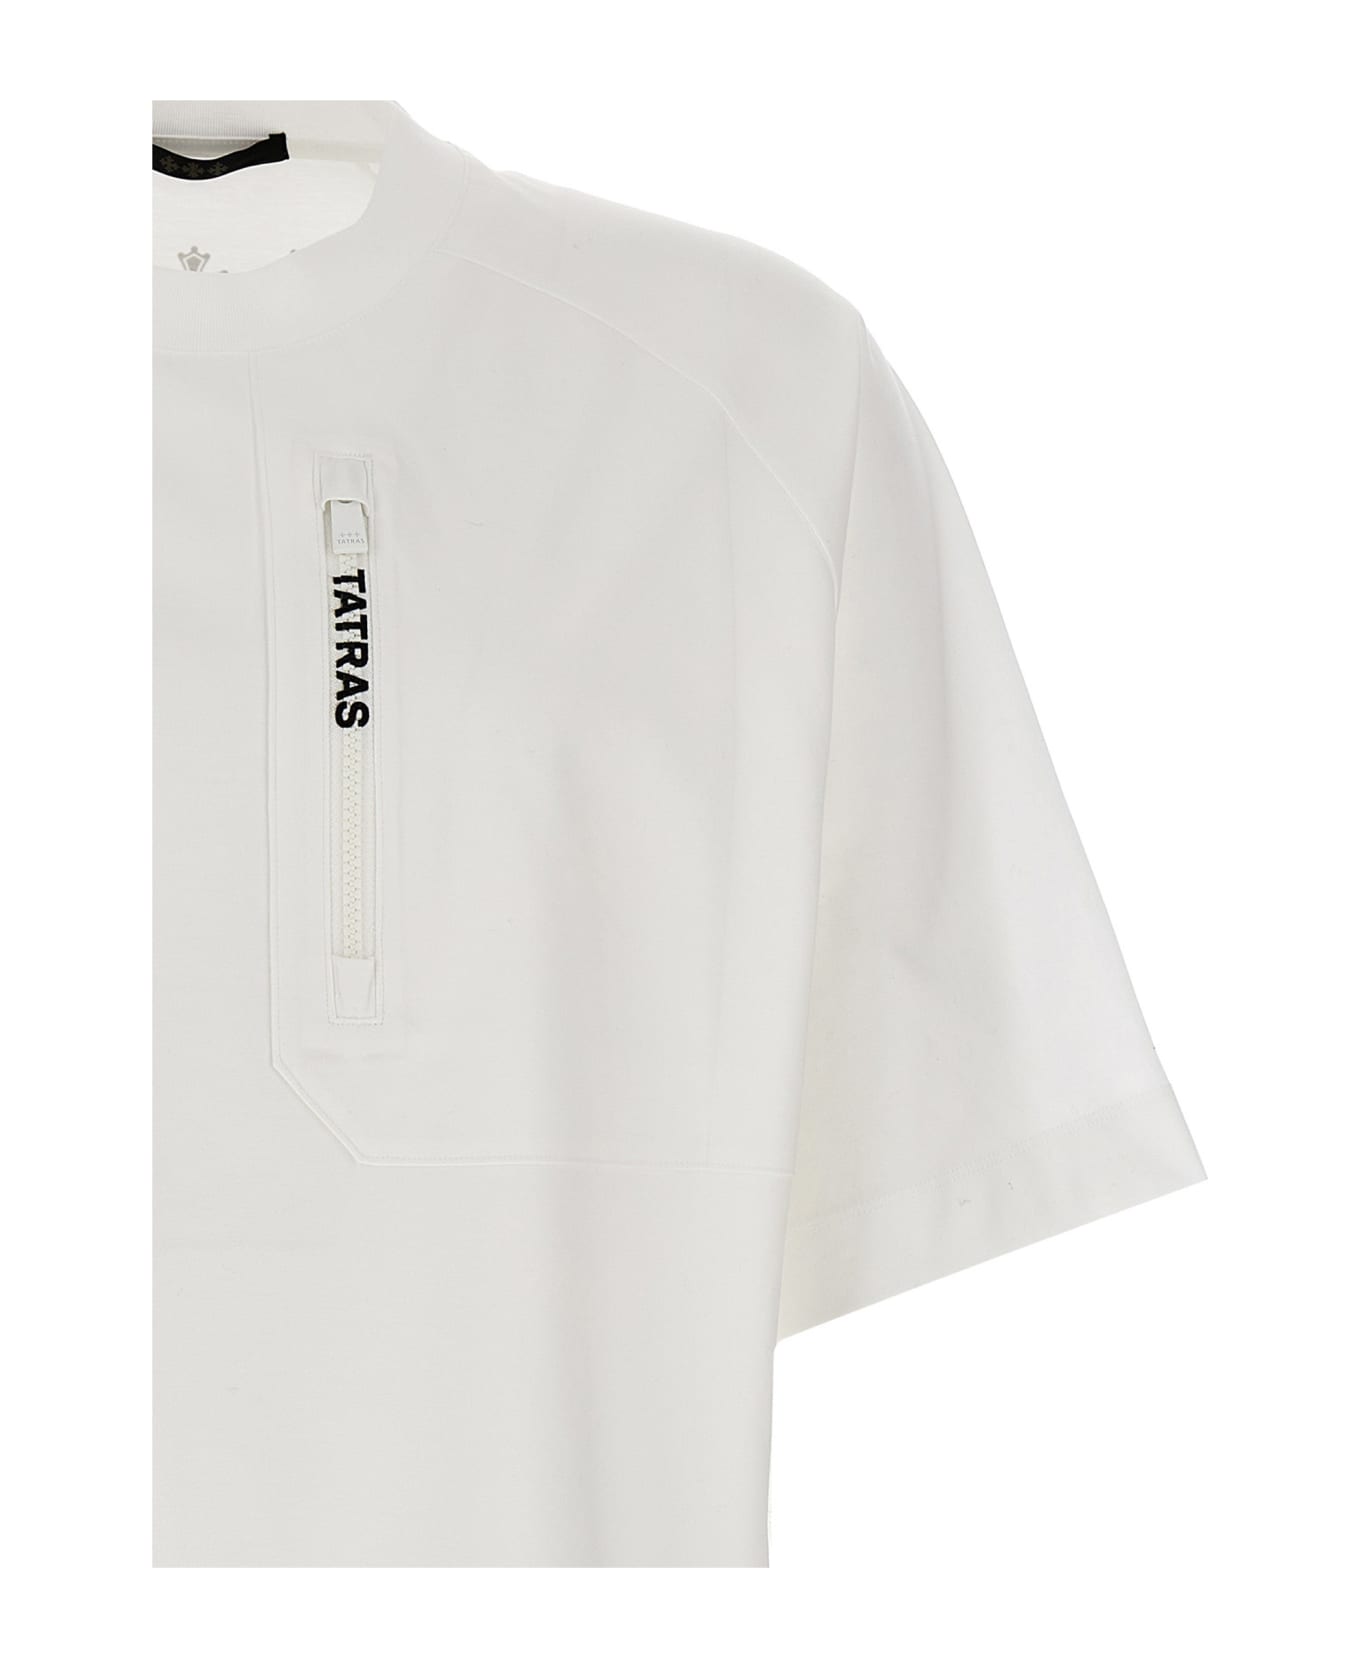 TATRAS 'jani' T-shirt - White